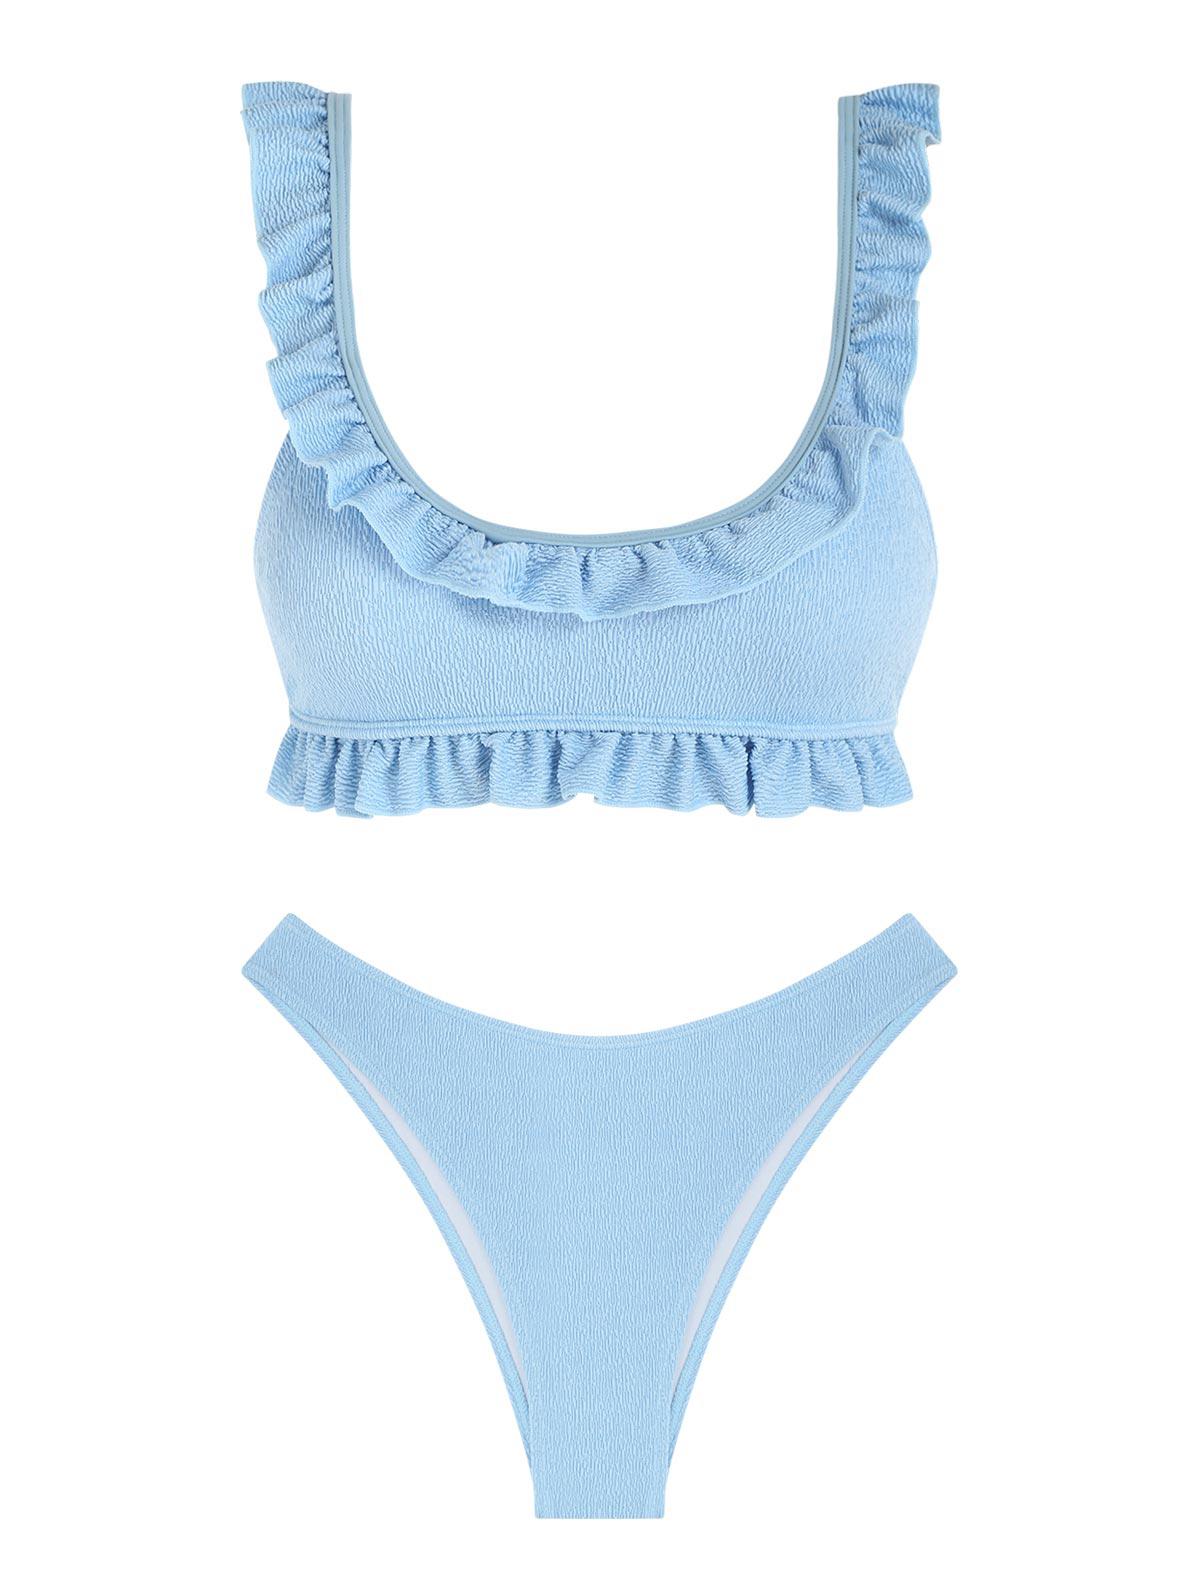 ZAFUL Crinkle Ruffle Cheeky Bikini Swimwear S Light blue